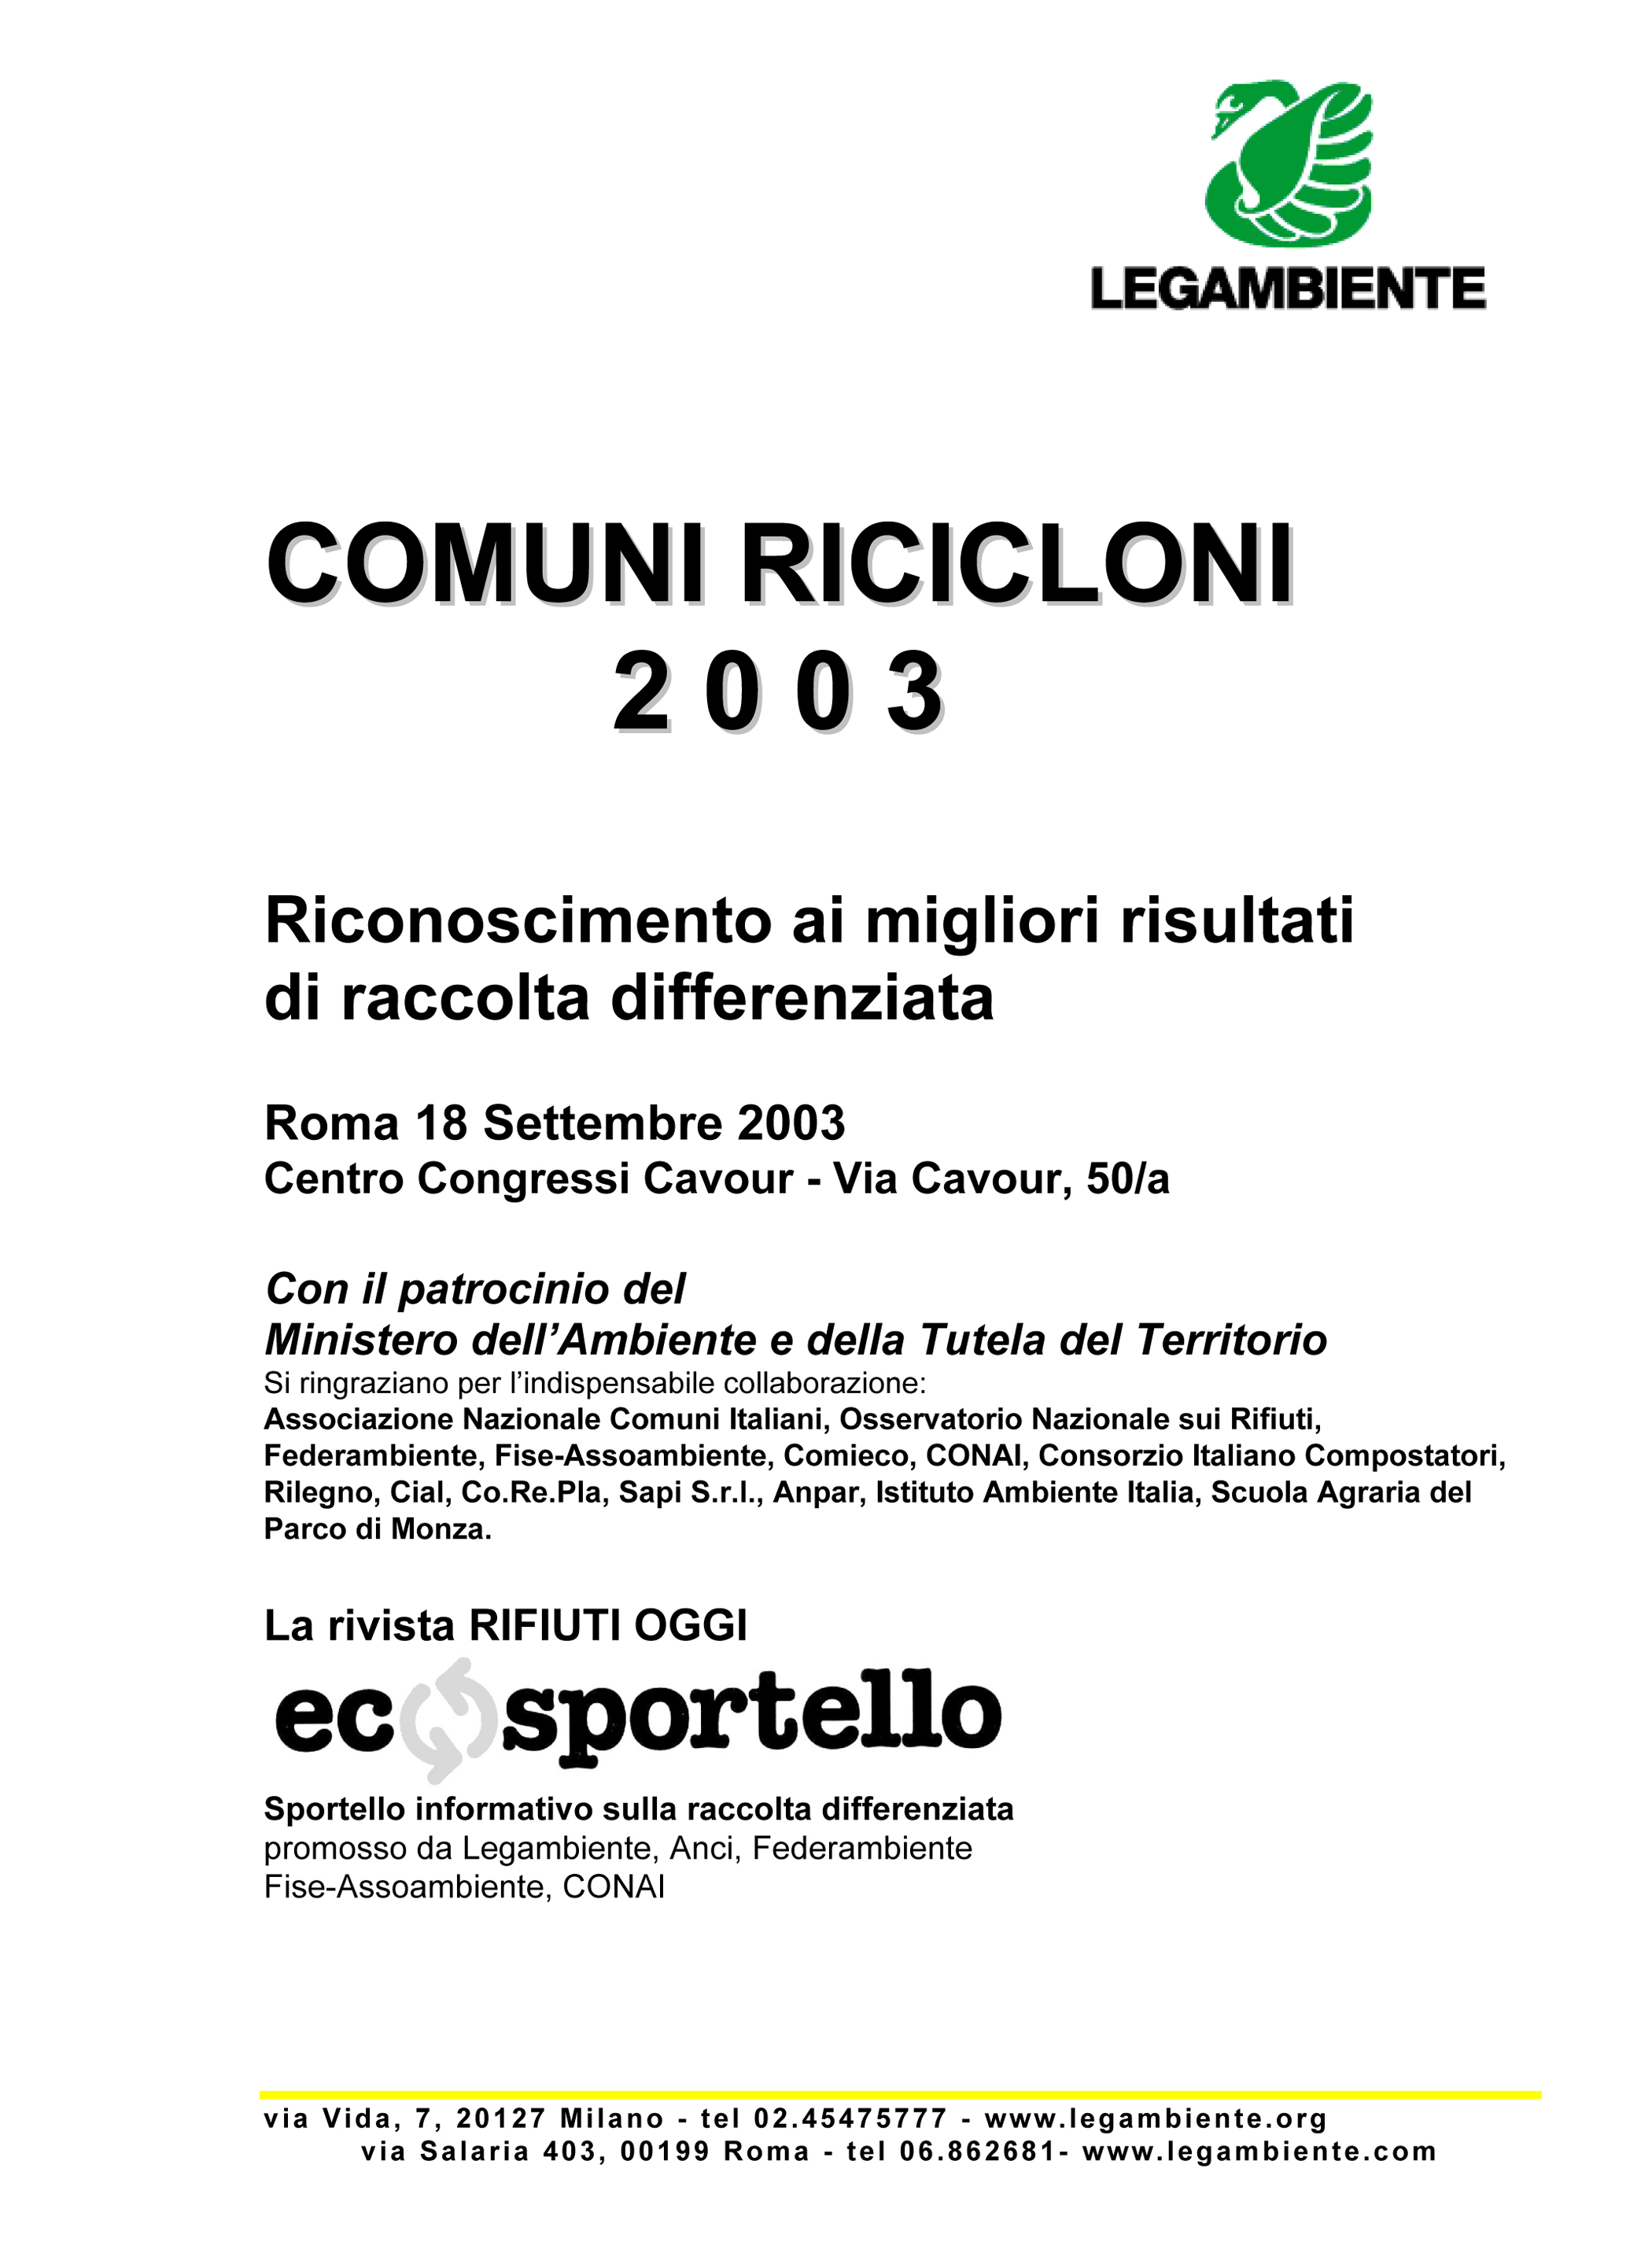 comuni-ricicloni-2003-1200862607.jpg